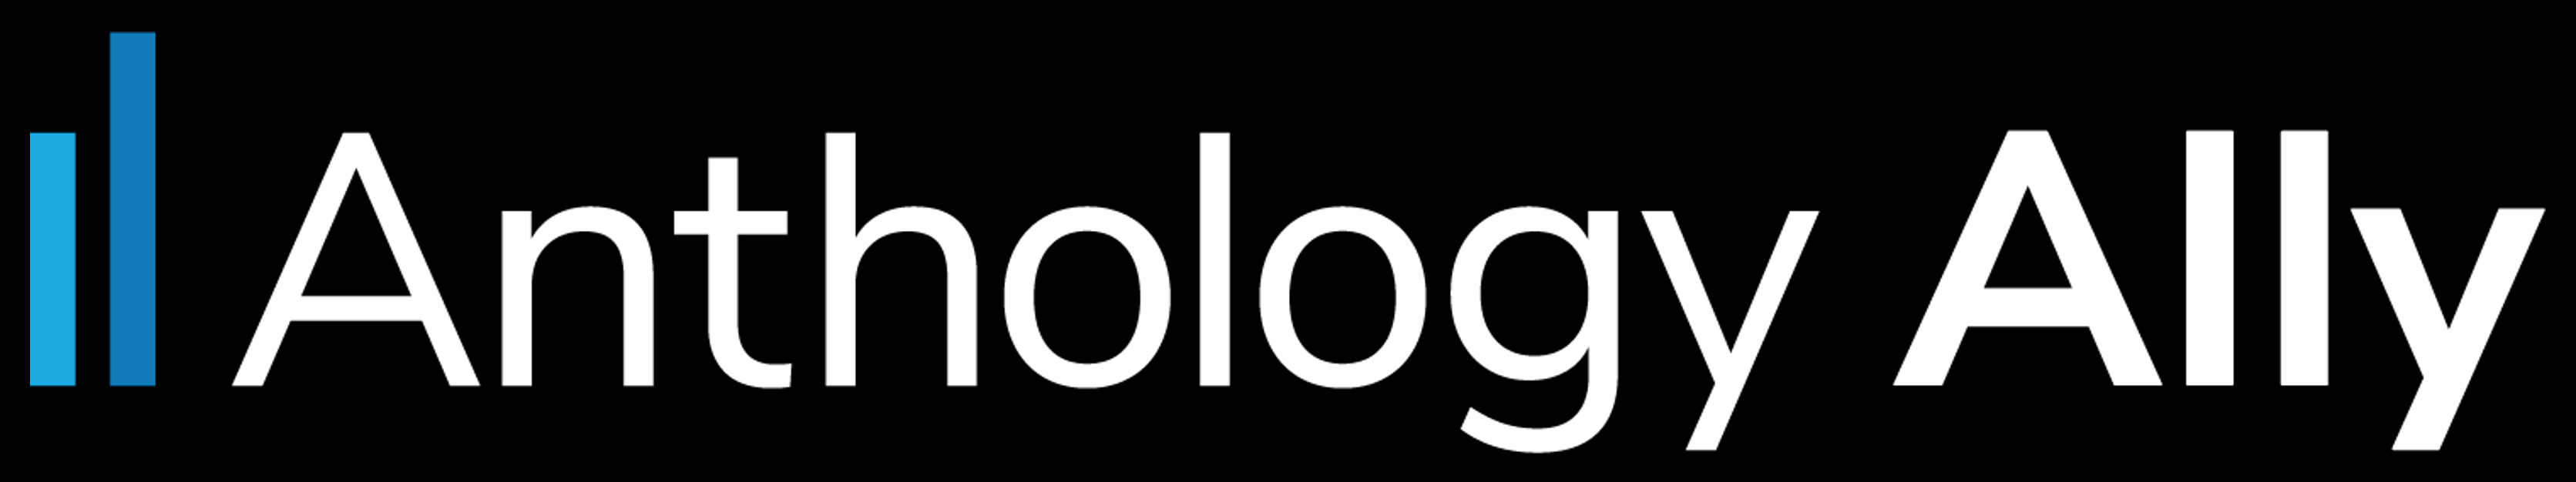 Anthology Ally horizontal logo with sans-serif font and white text